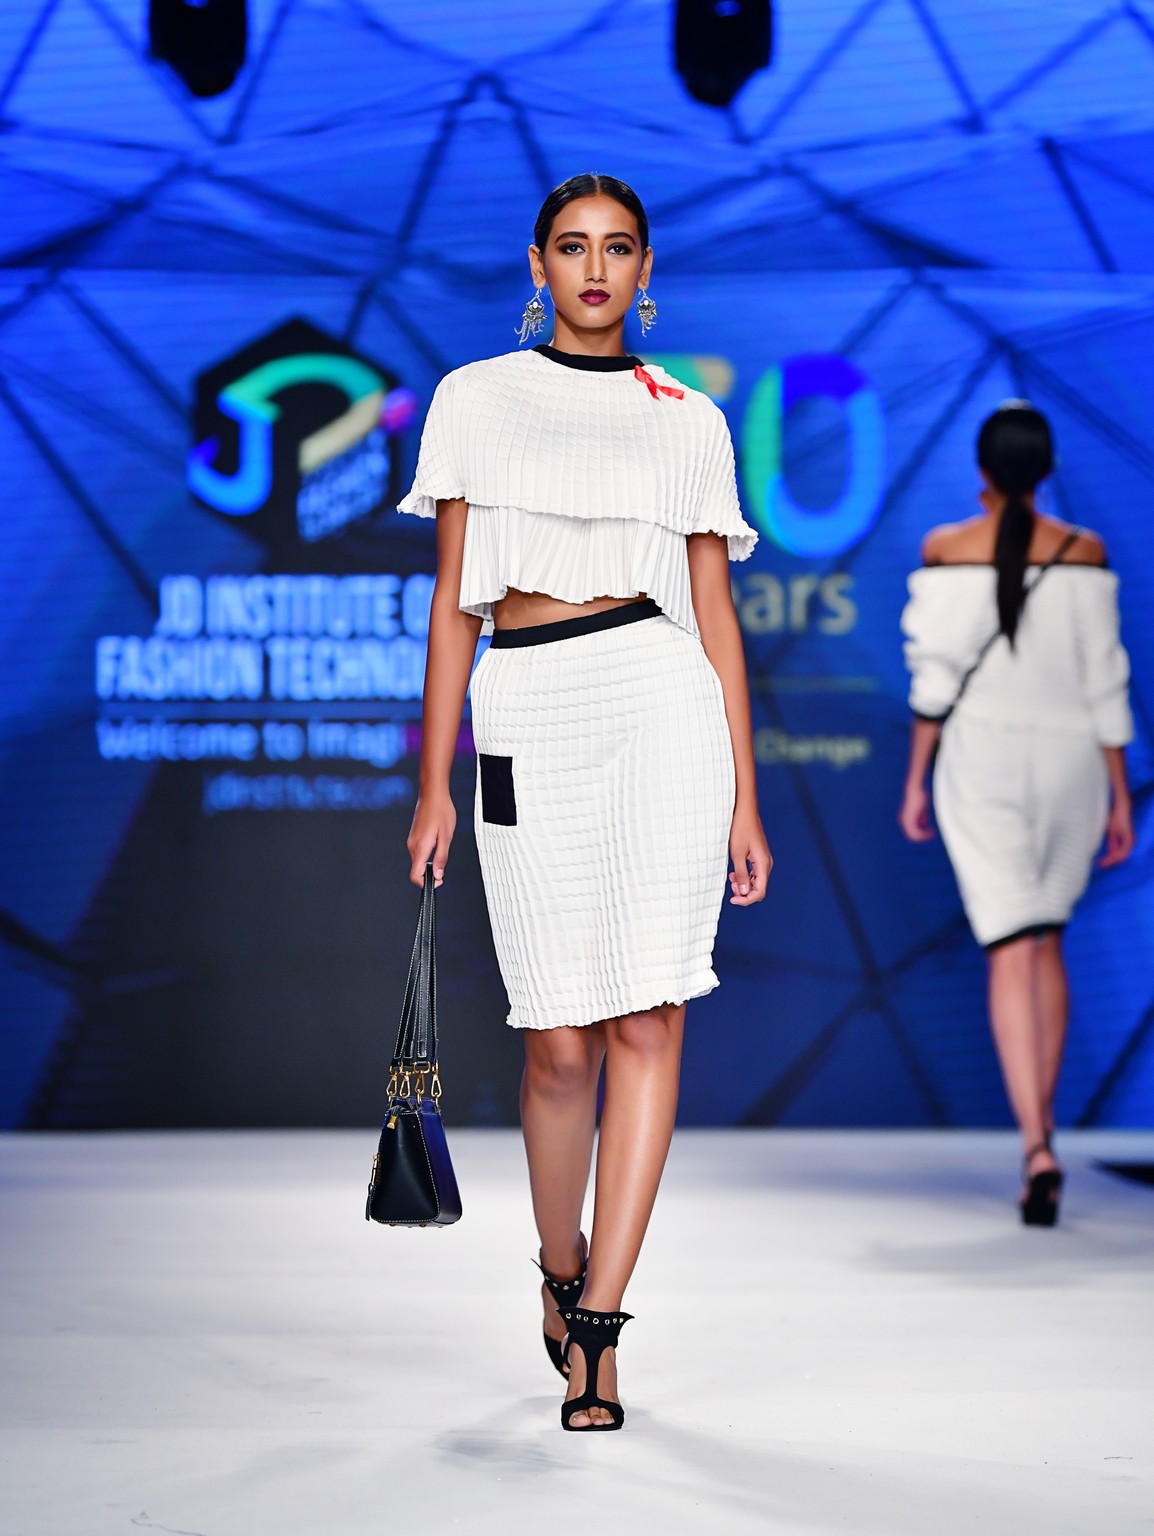 bangalore times fashion week - BTFW Collection3 3 - Jediiians at Bangalore Times Fashion Week 2018